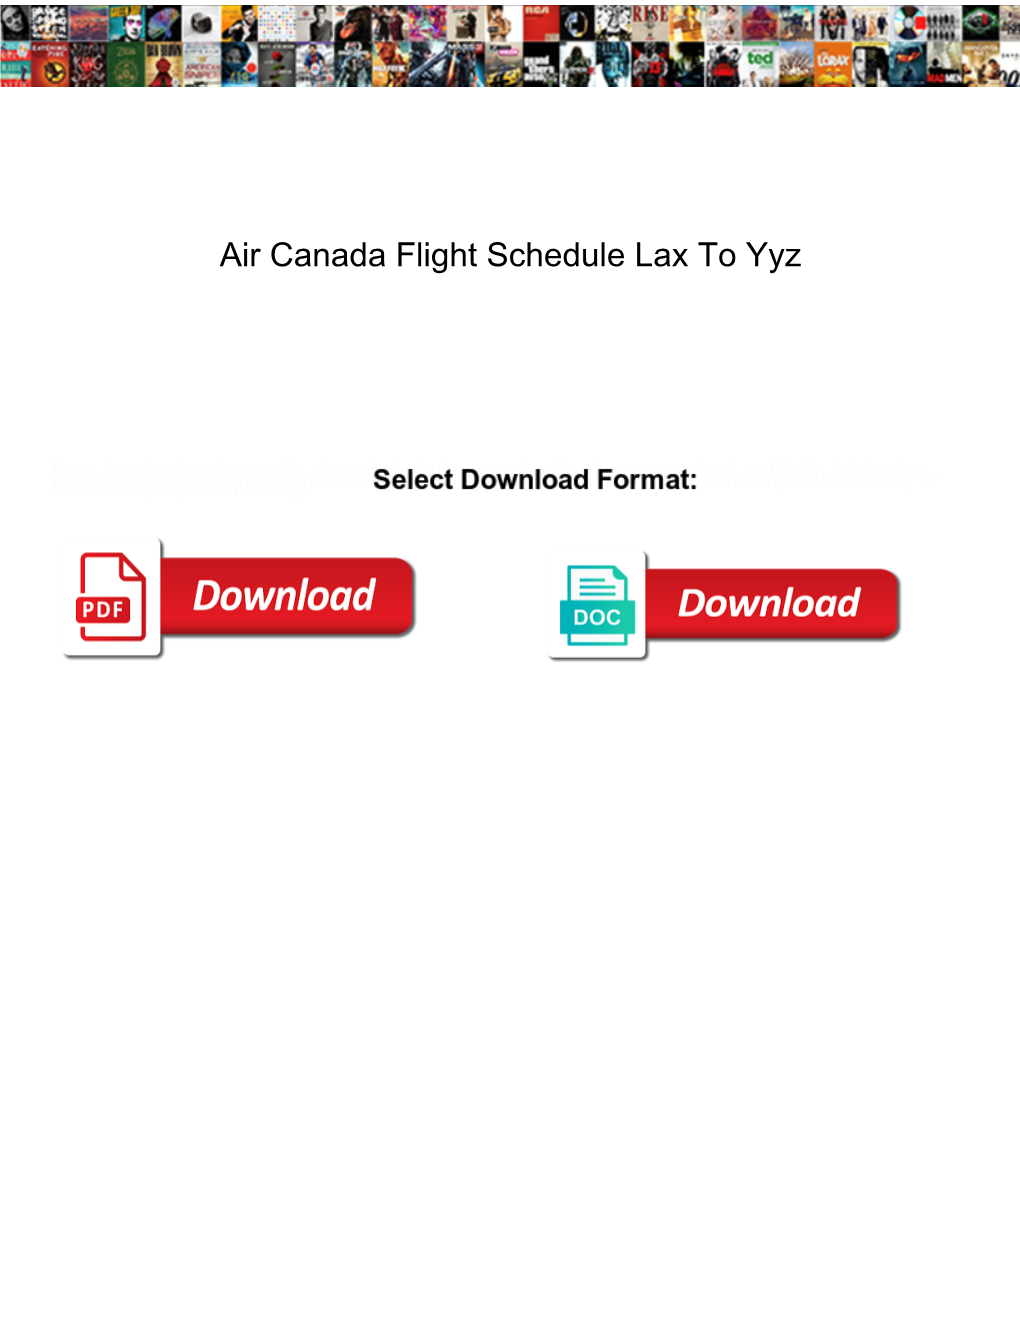 Air Canada Flight Schedule Lax to Yyz